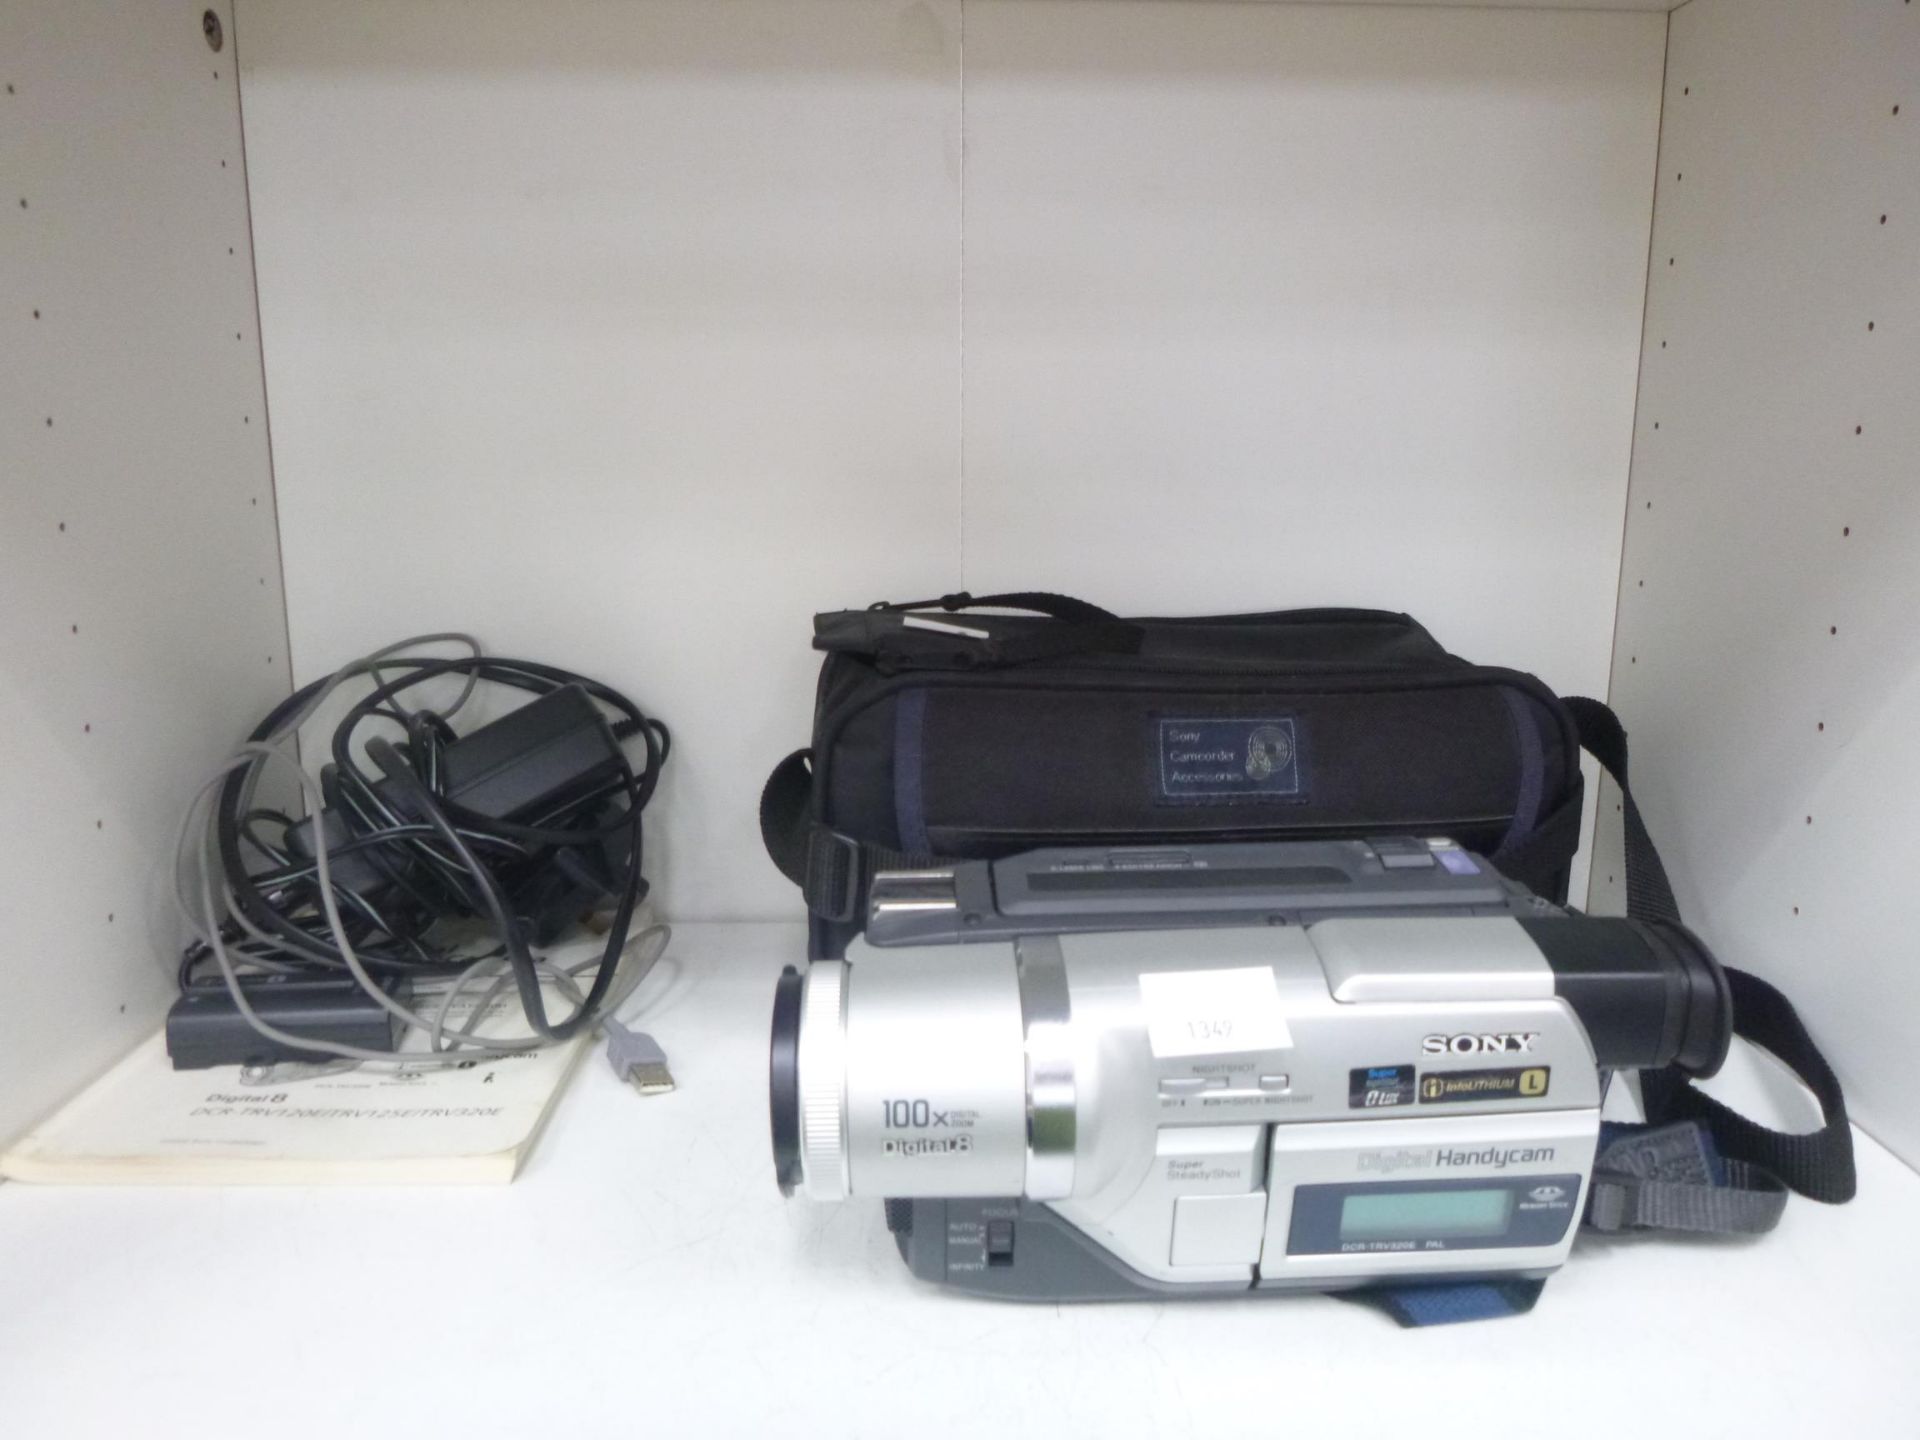 A Sony Digital Handycam (with box)(est. £20-£40)